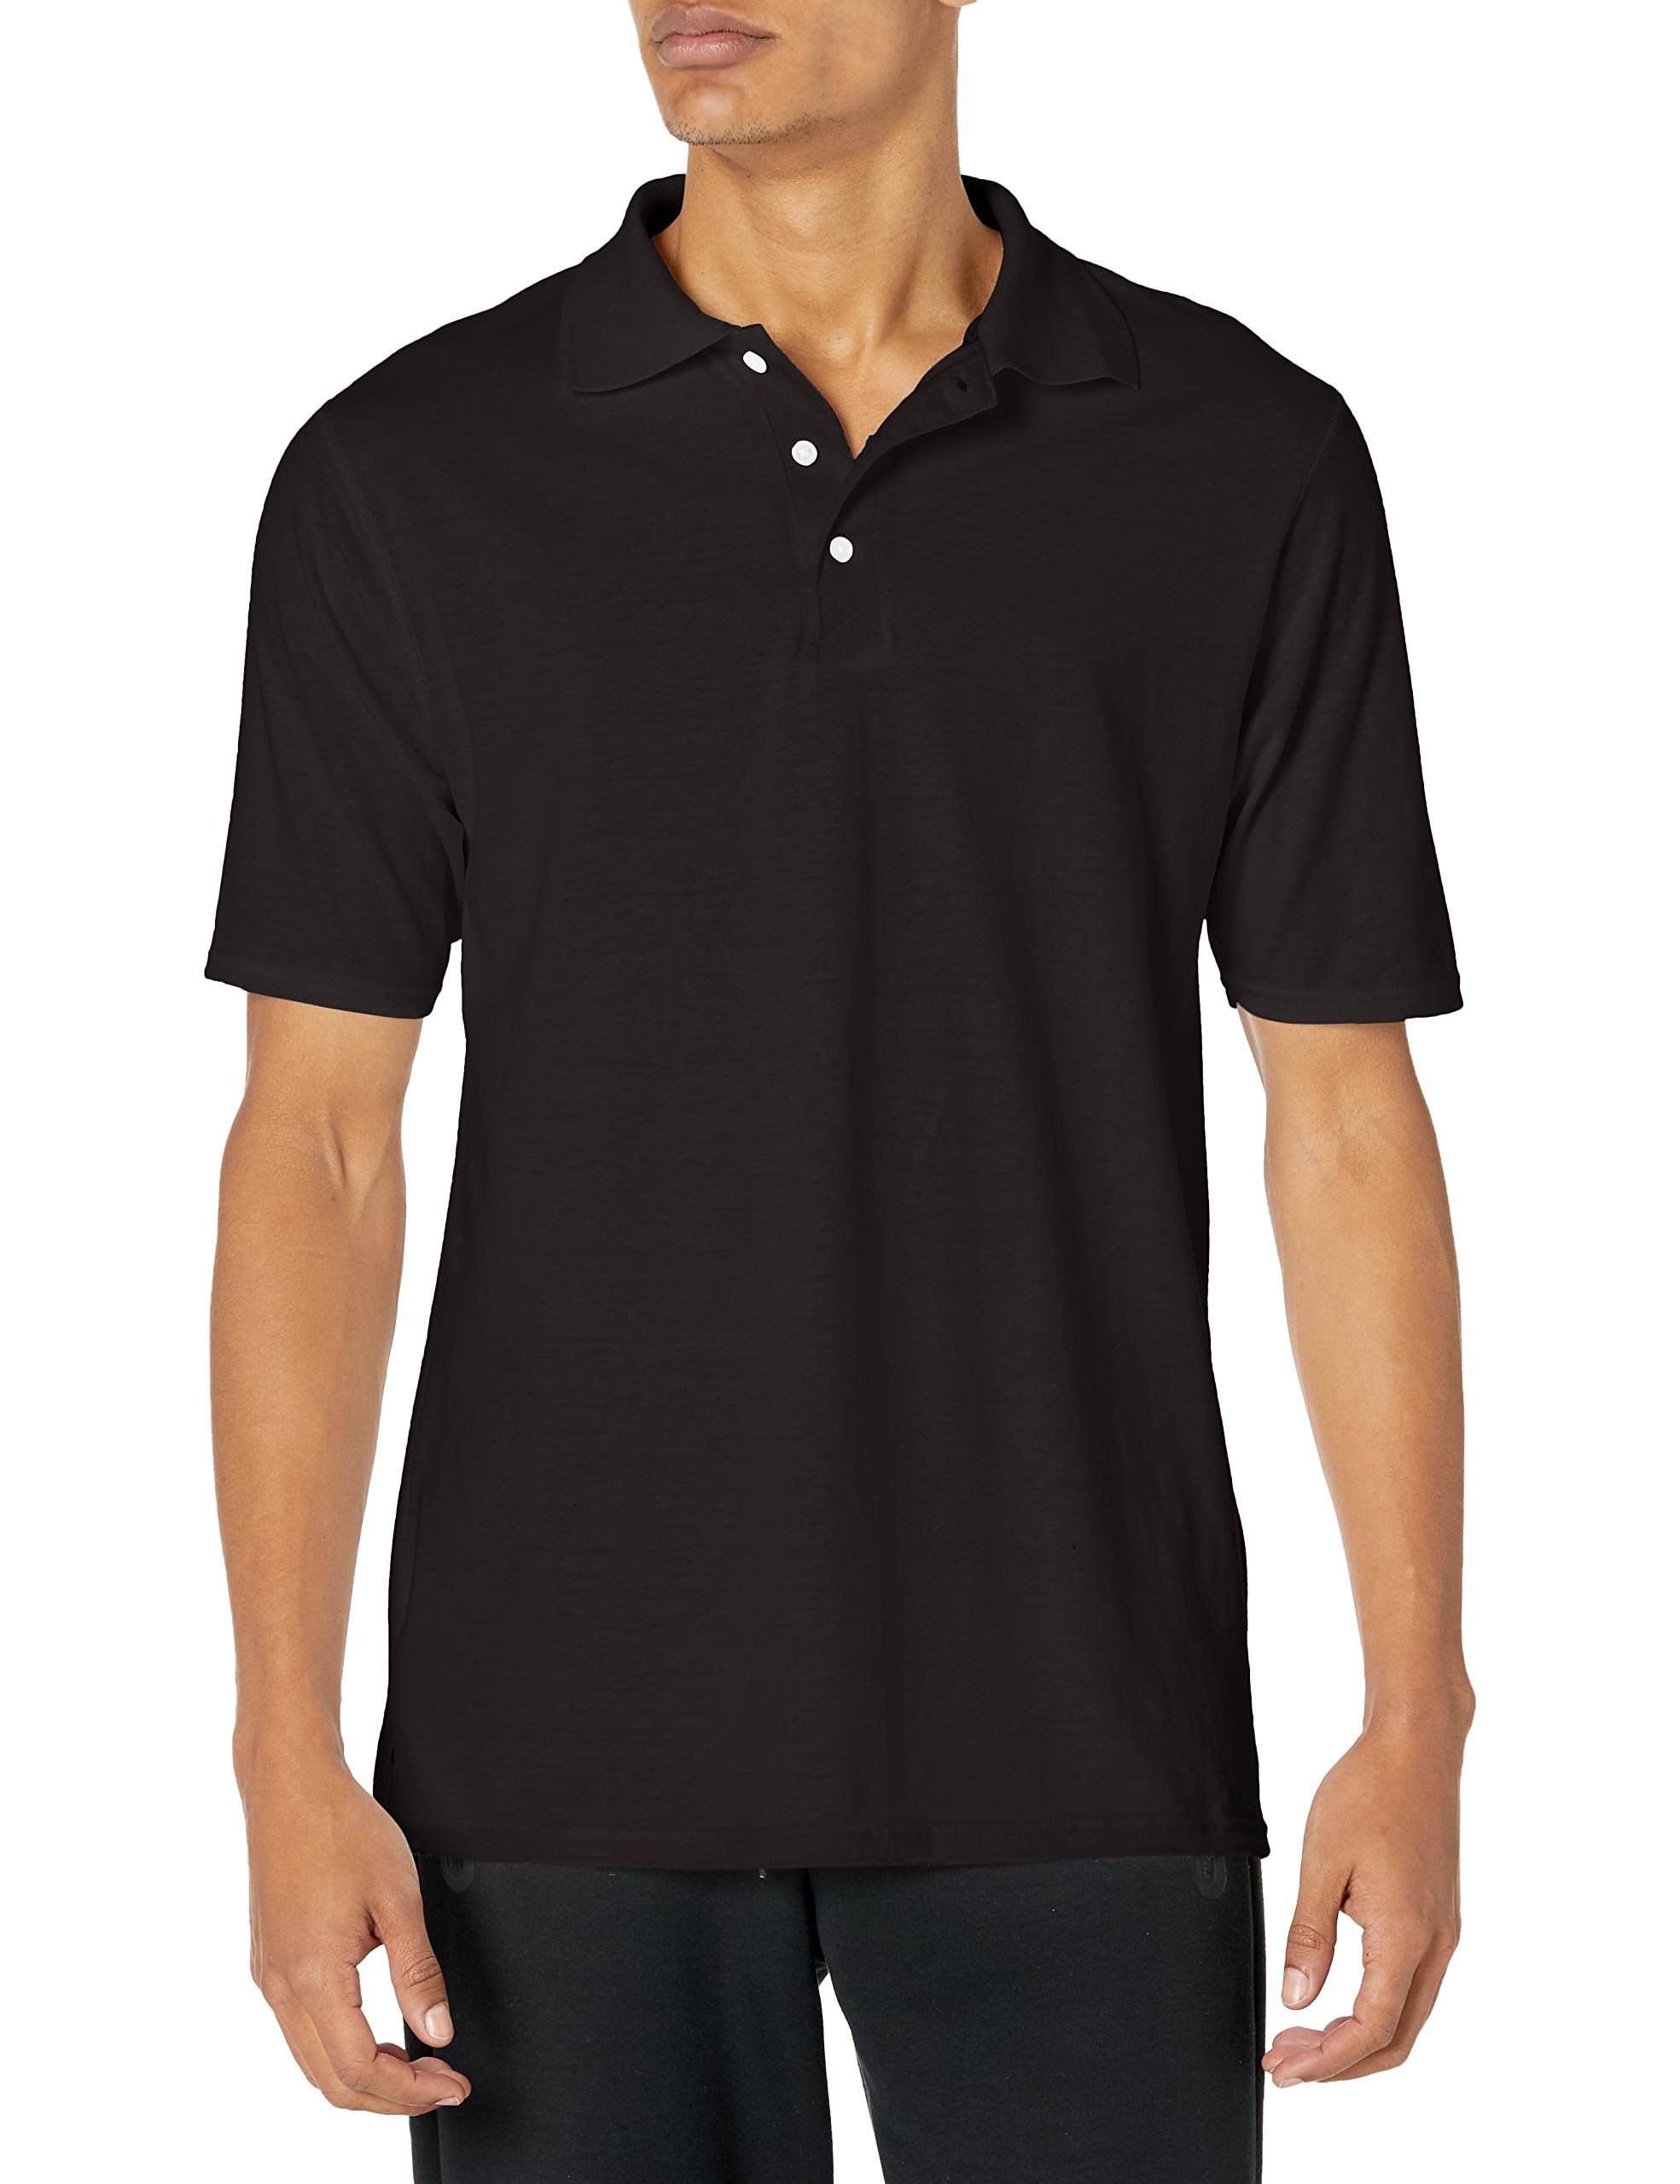 Hanes Men's Short Sleeve X-Temp Polo Shirt w/ FreshIQ (Black or Deep ...